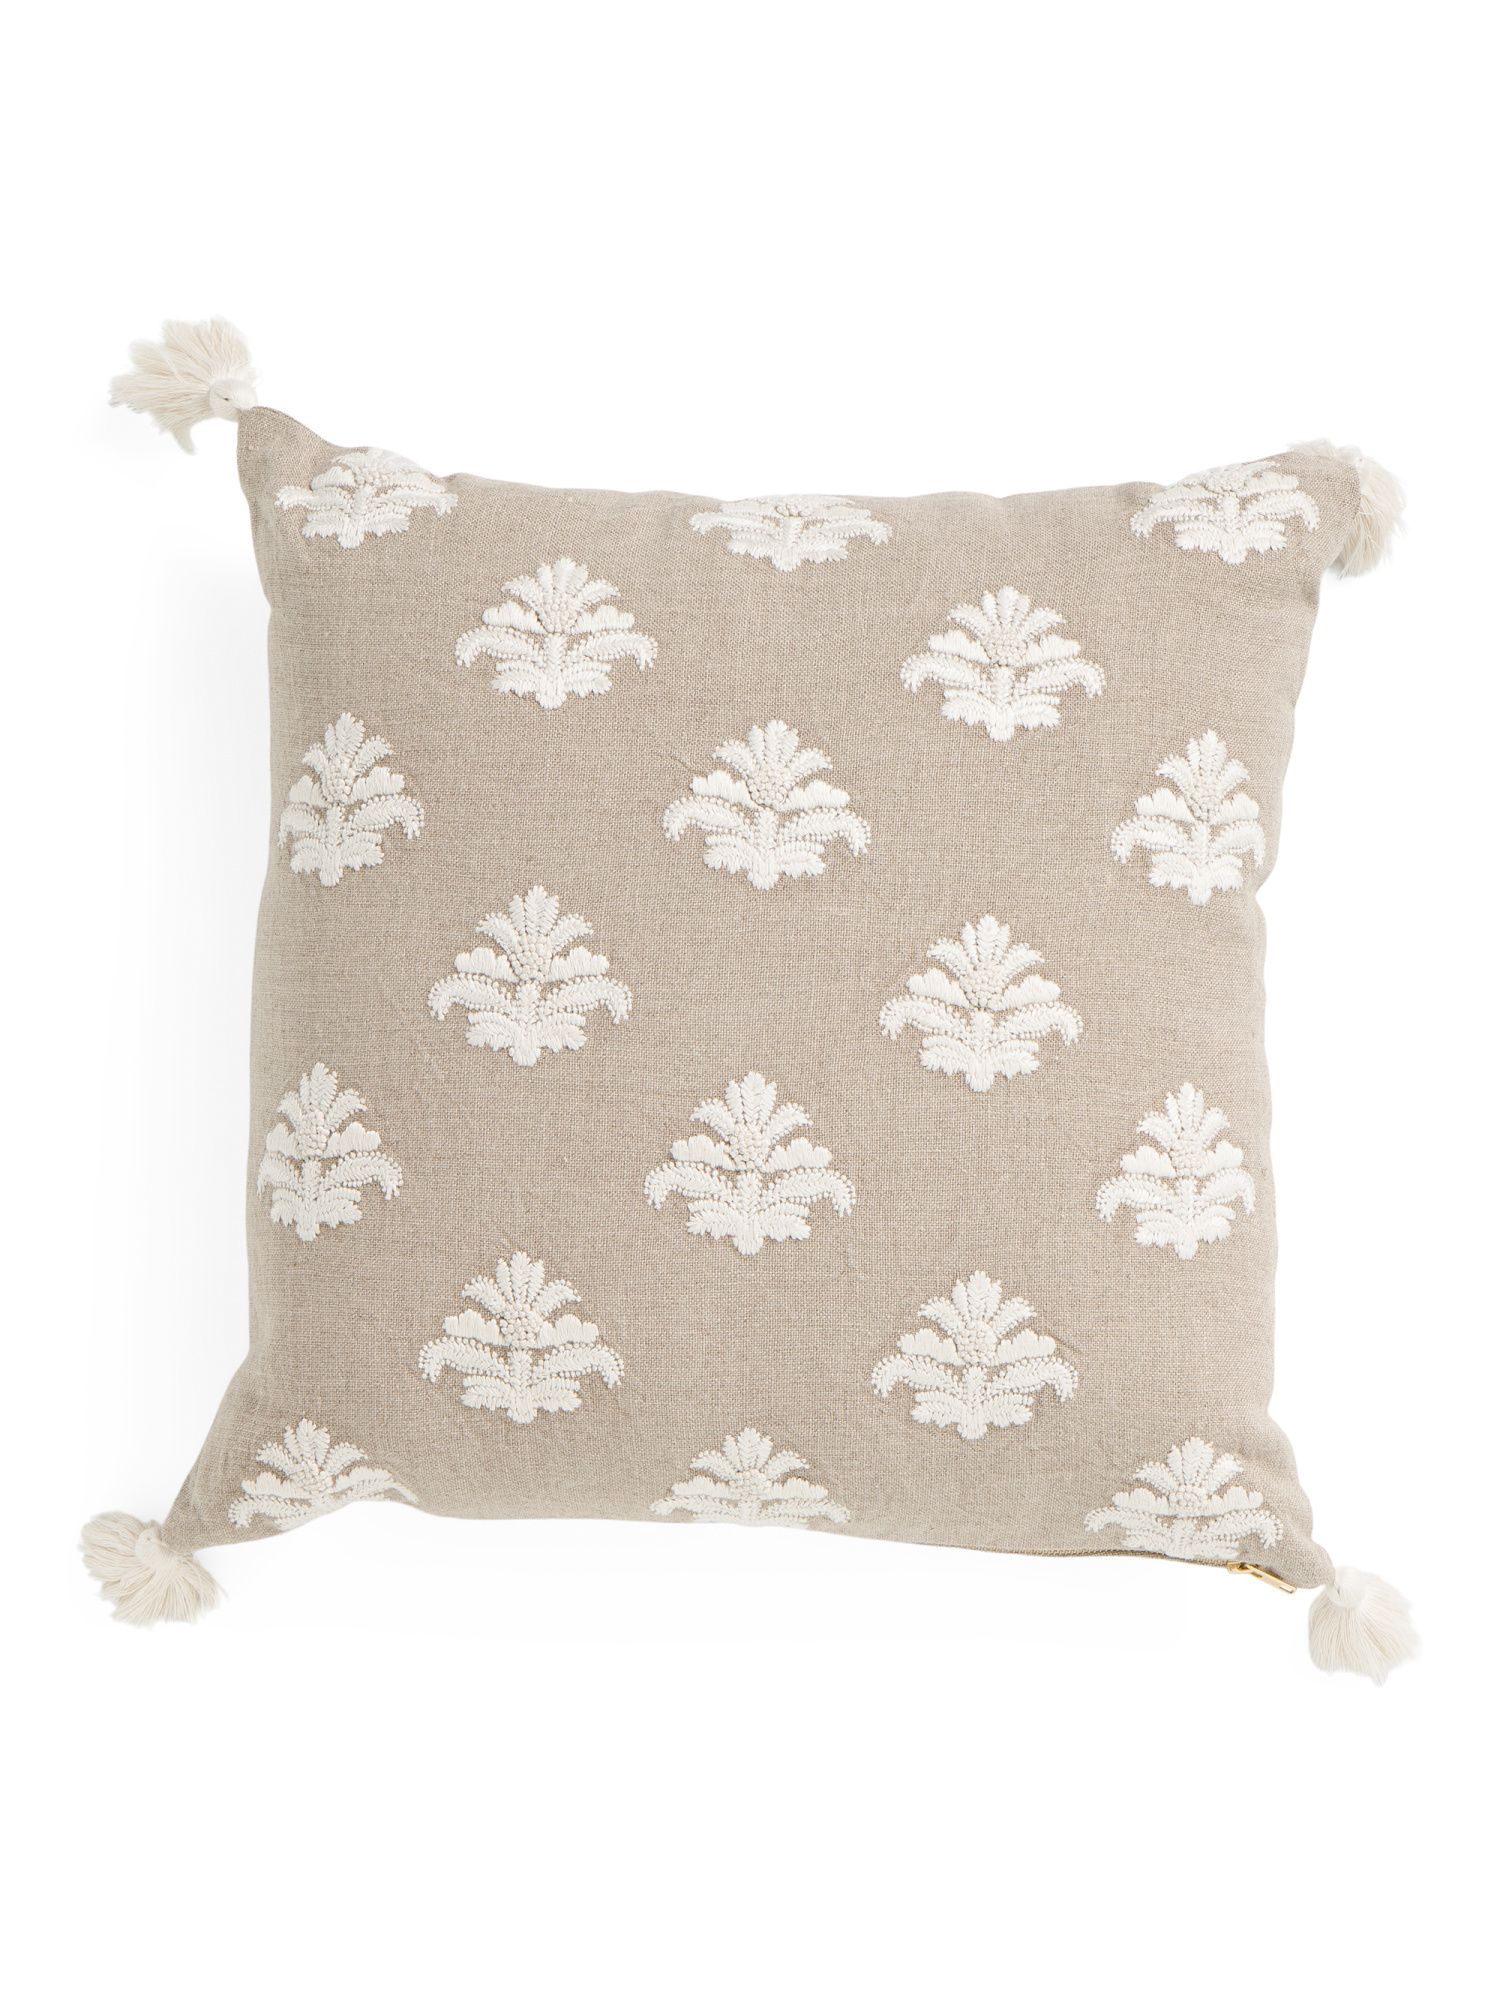 20x20 Linen Embroidered Floral Pillow | The Global Decor Shop | Marshalls | Marshalls